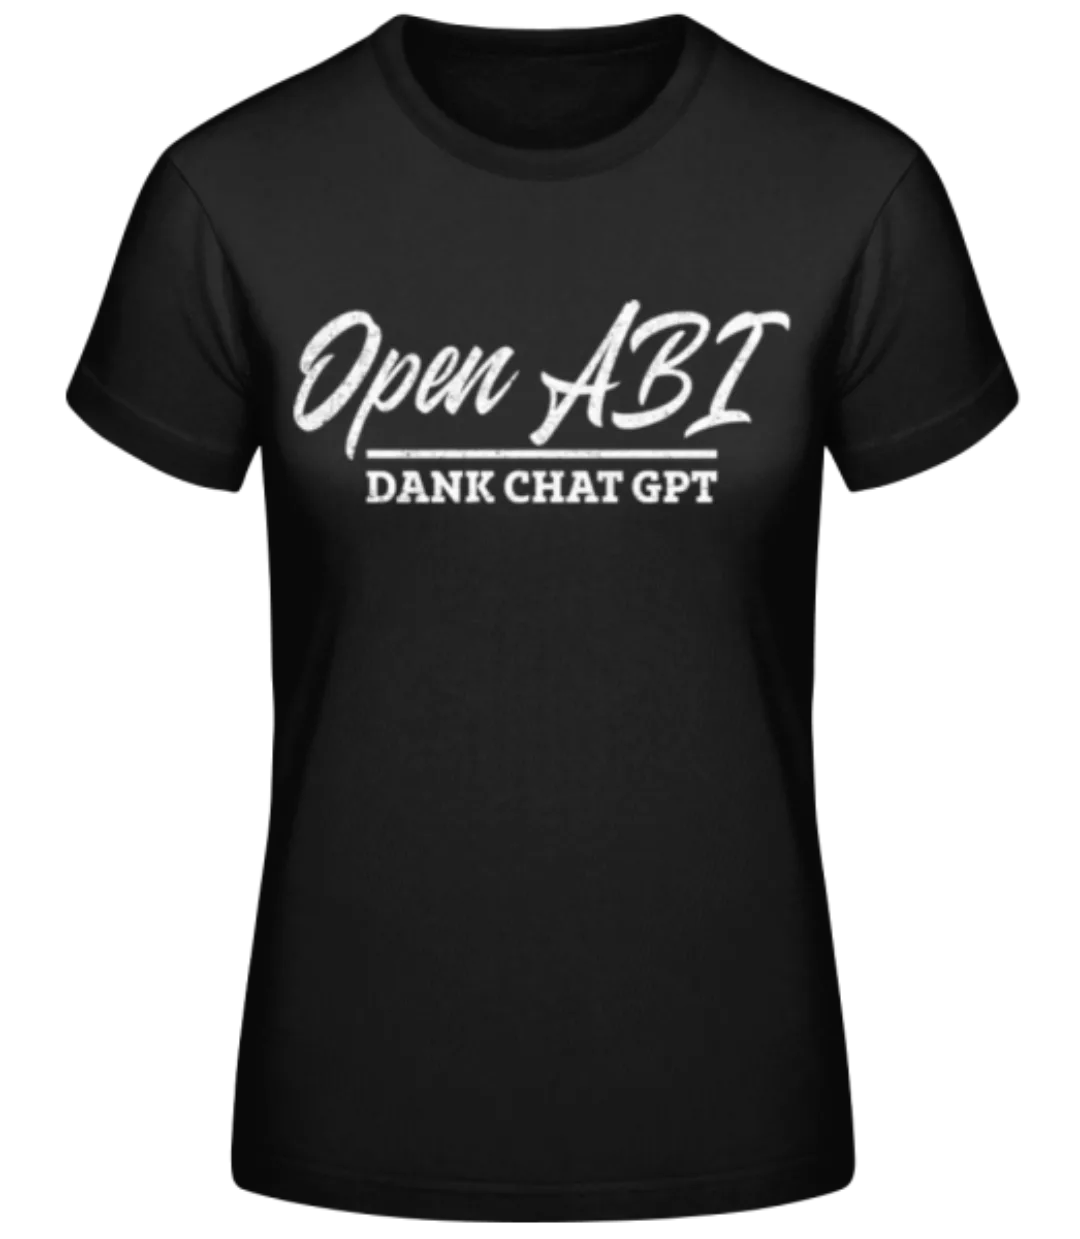 Open ABI Dank ChatGPT · Frauen Basic T-Shirt günstig online kaufen